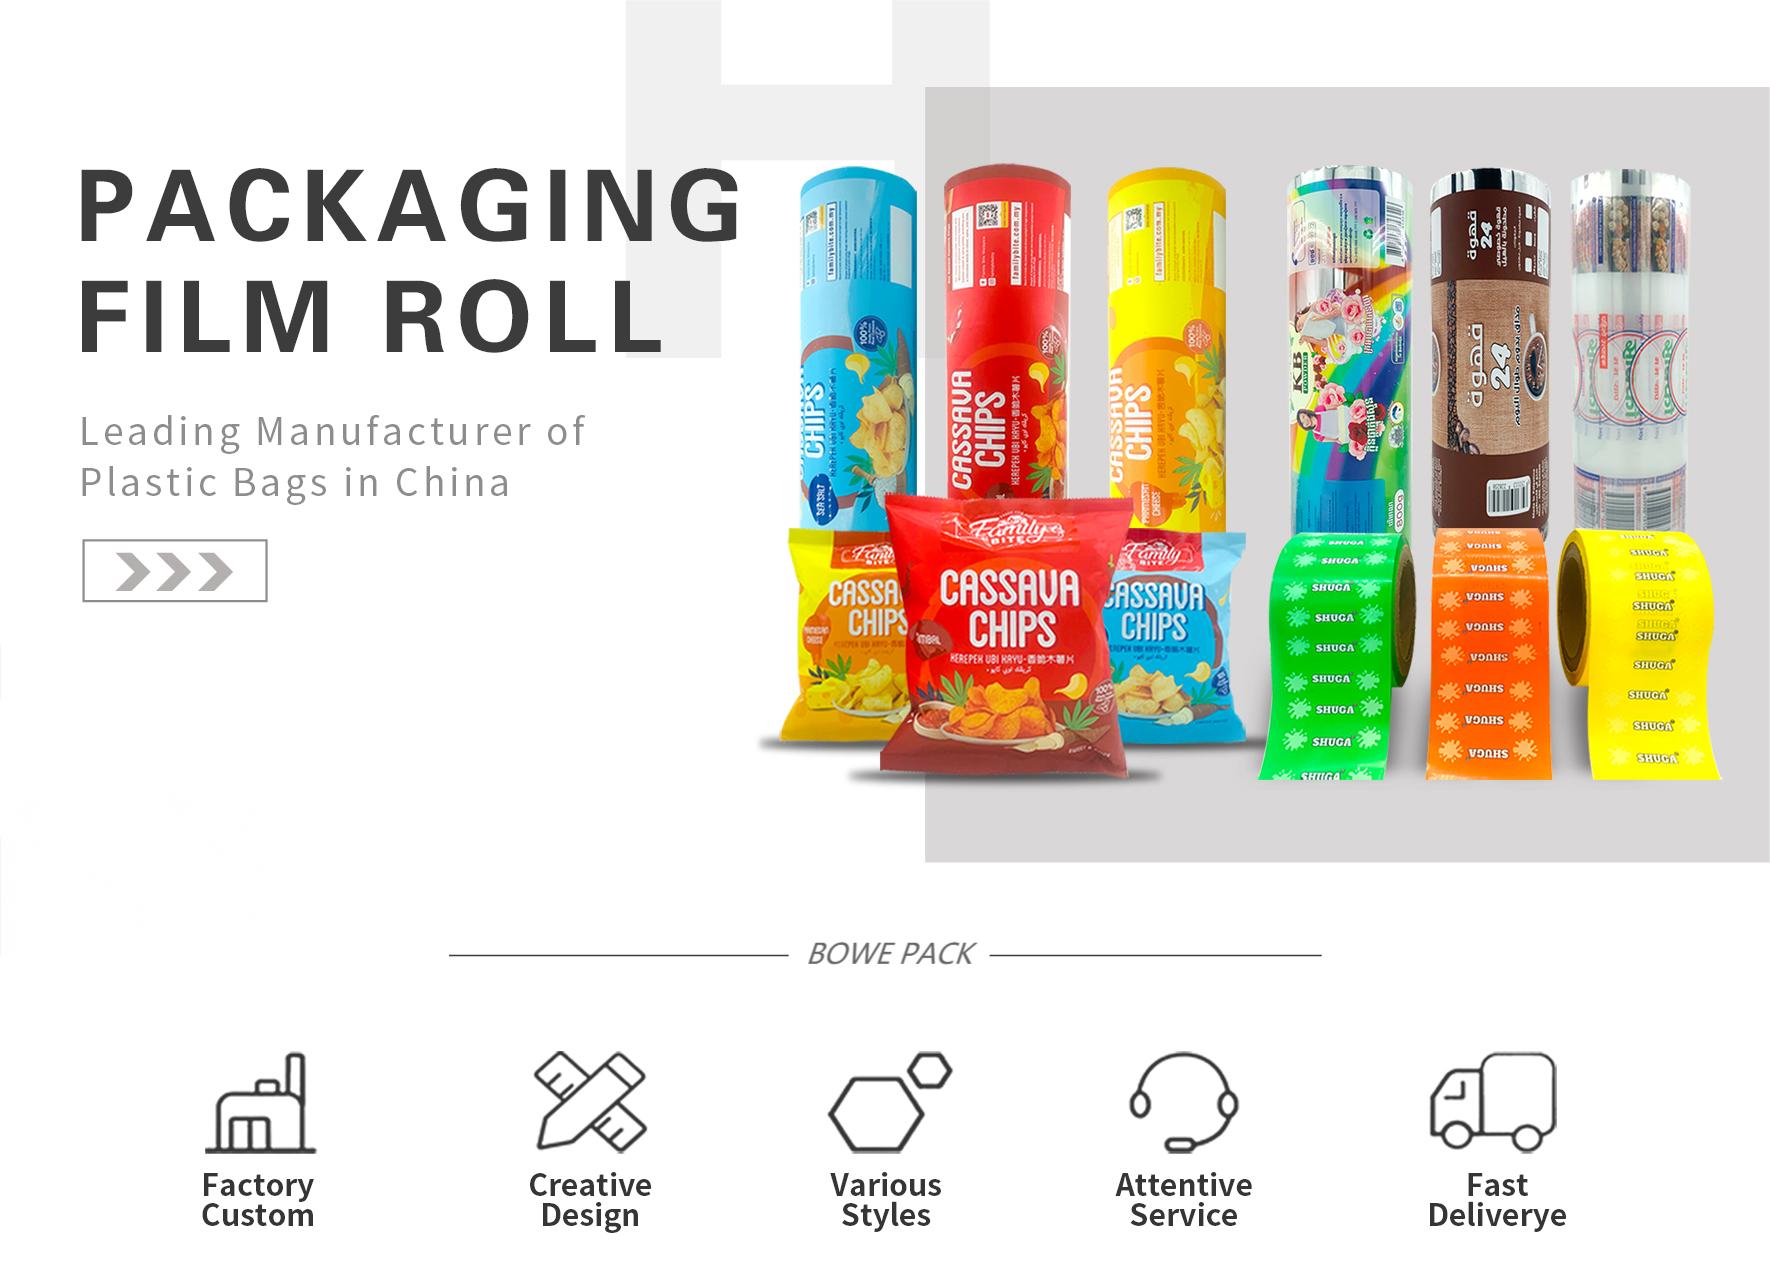 biodegradbale packaging film roll